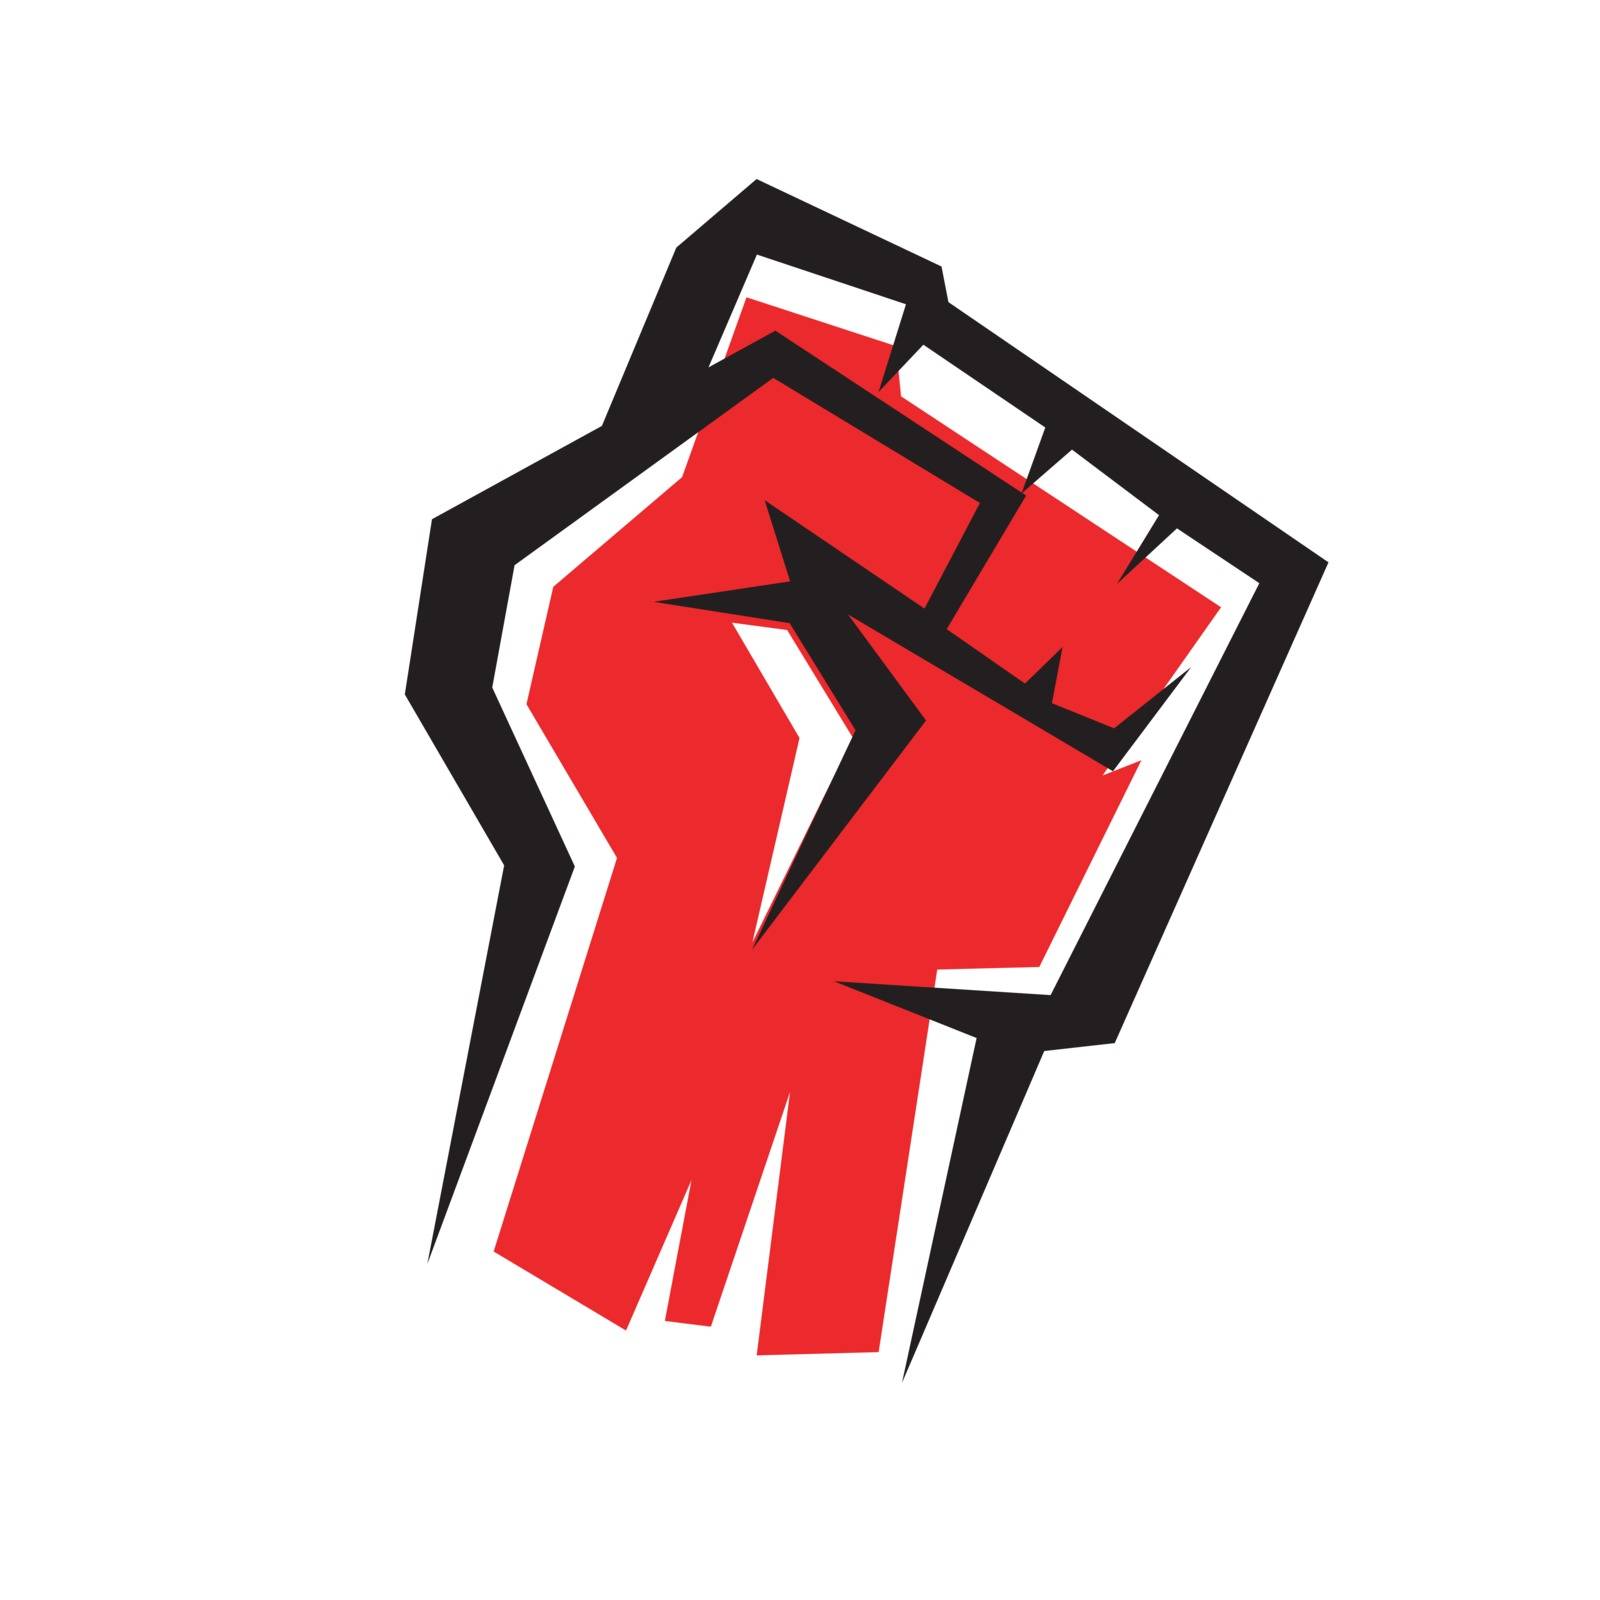 fist stylized vector icon, revolution concept by baldyrgan